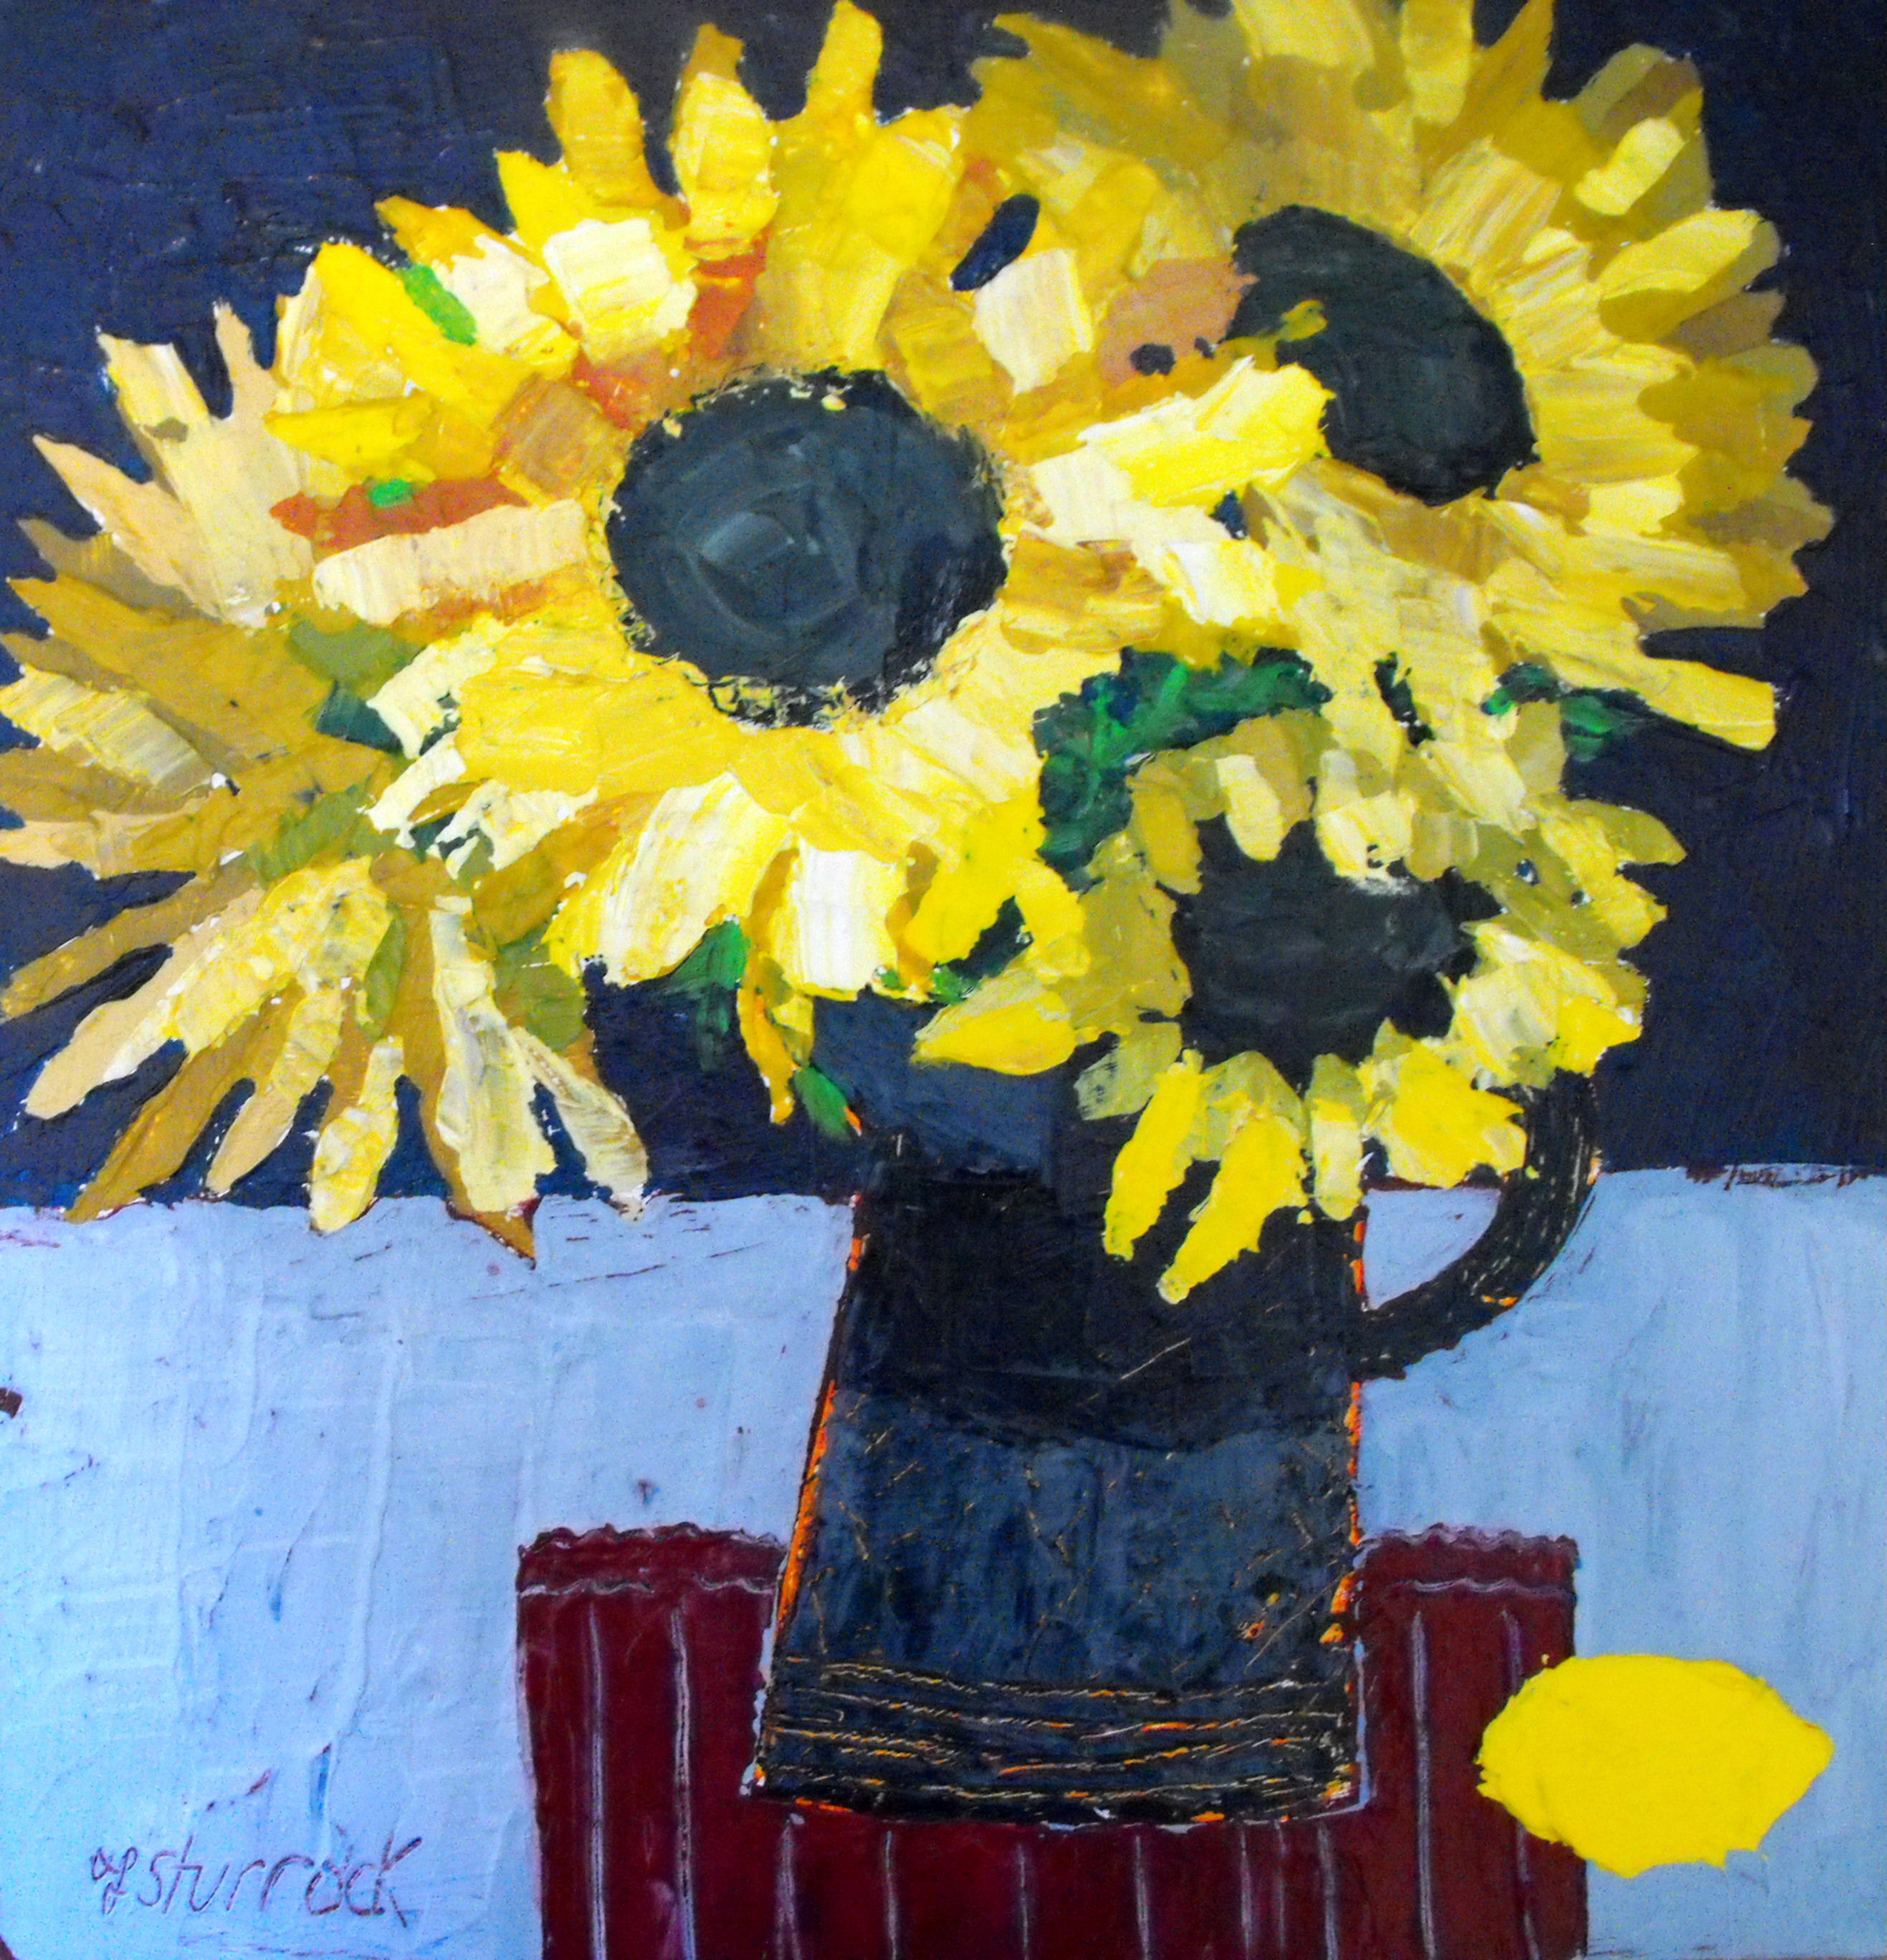 'Sunflowers and Lemon' by artist Fiona Sturrock